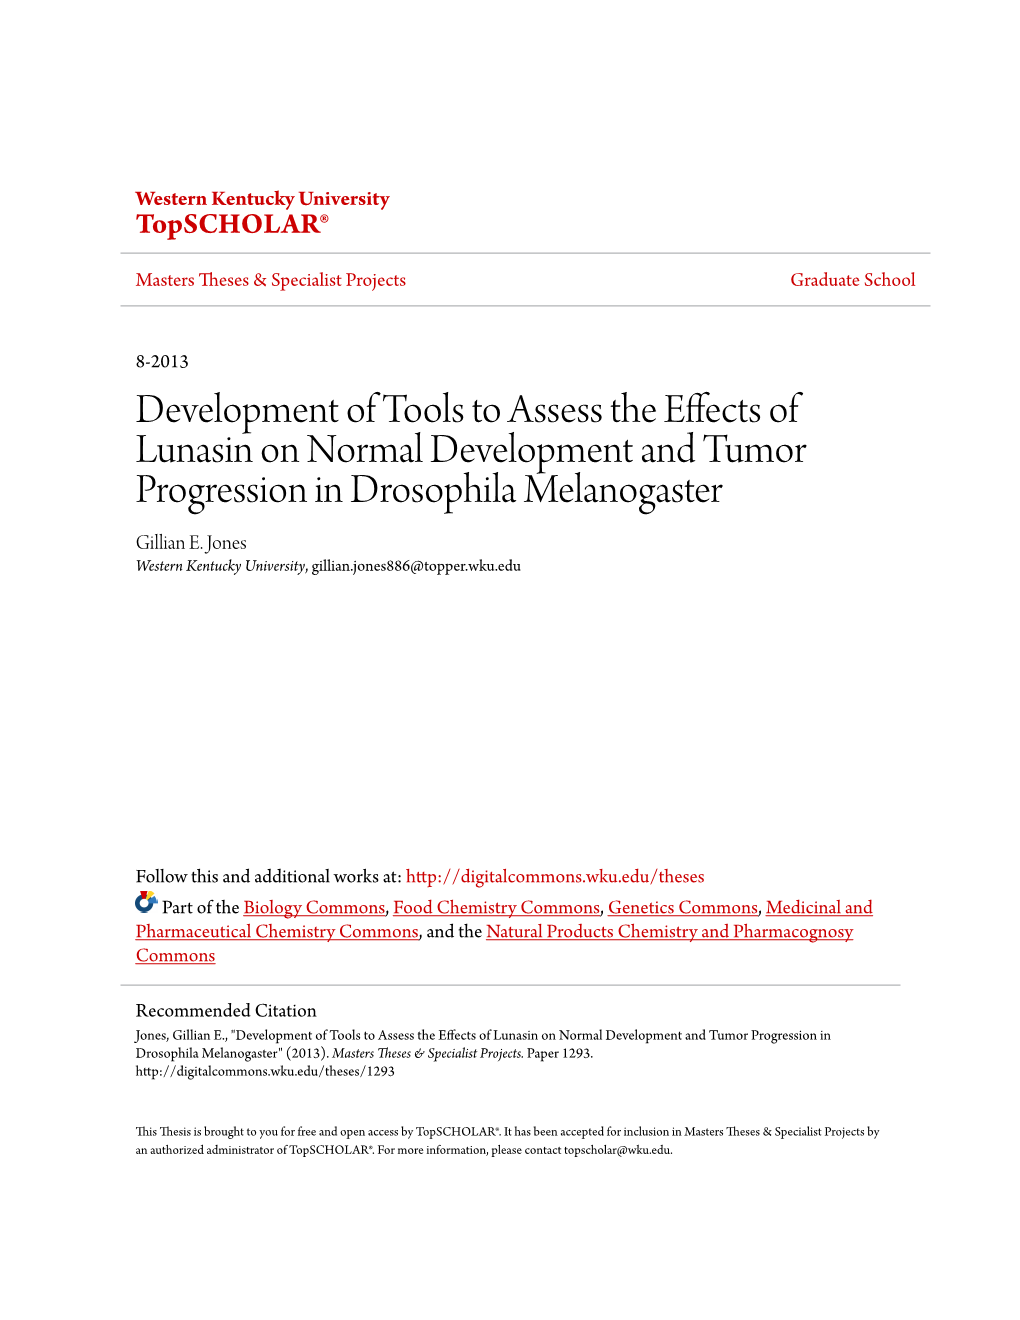 Development of Tools to Assess the Effects of Lunasin on Normal Development and Tumor Progression in Drosophila Melanogaster Gillian E